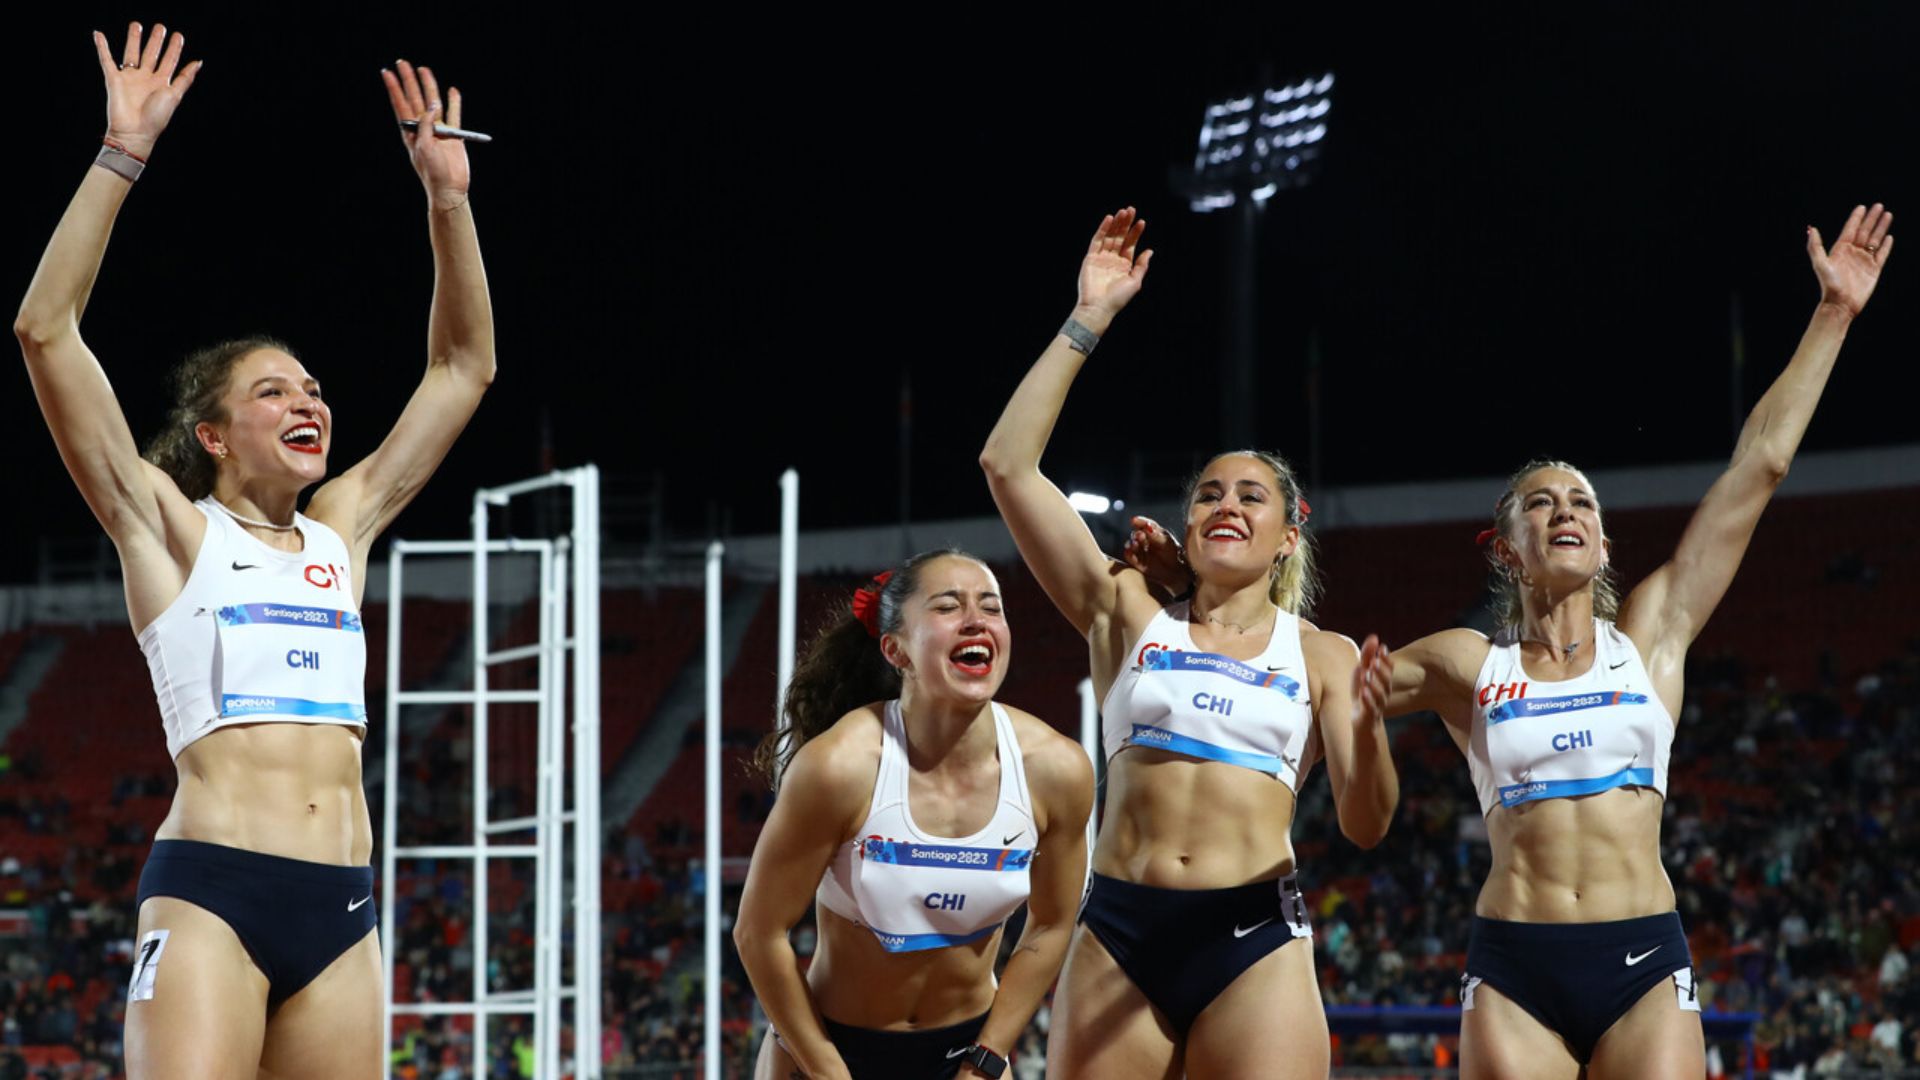 Chilenos al Día: Posta 4x100 femenina consiguió plata panamericana